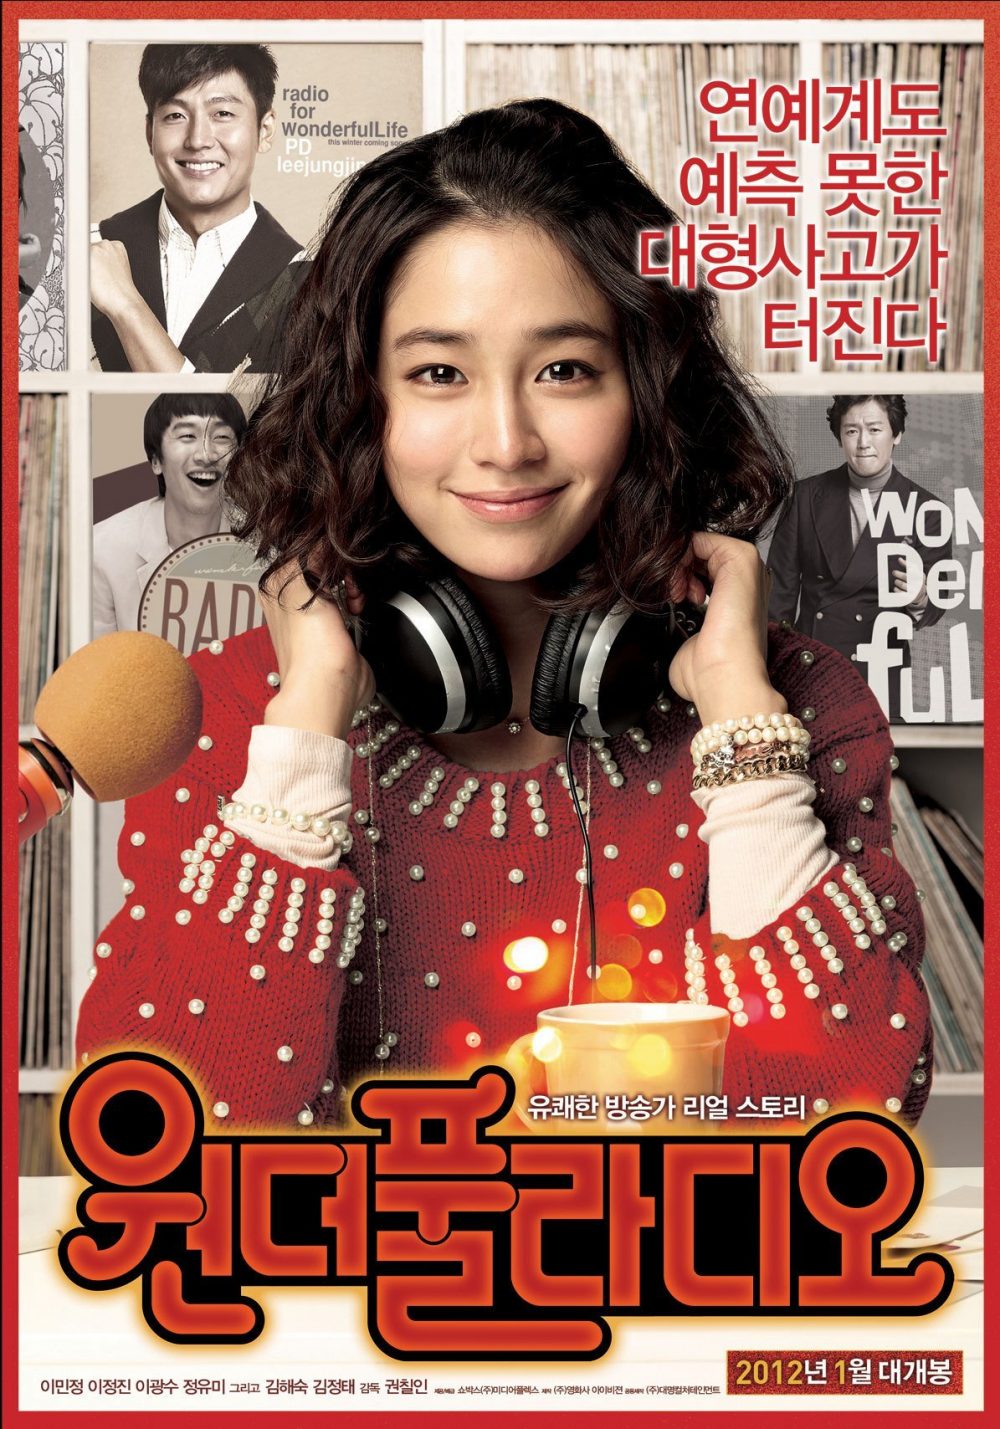 Phim của Lee Min Jung: Radio kỳ diệu